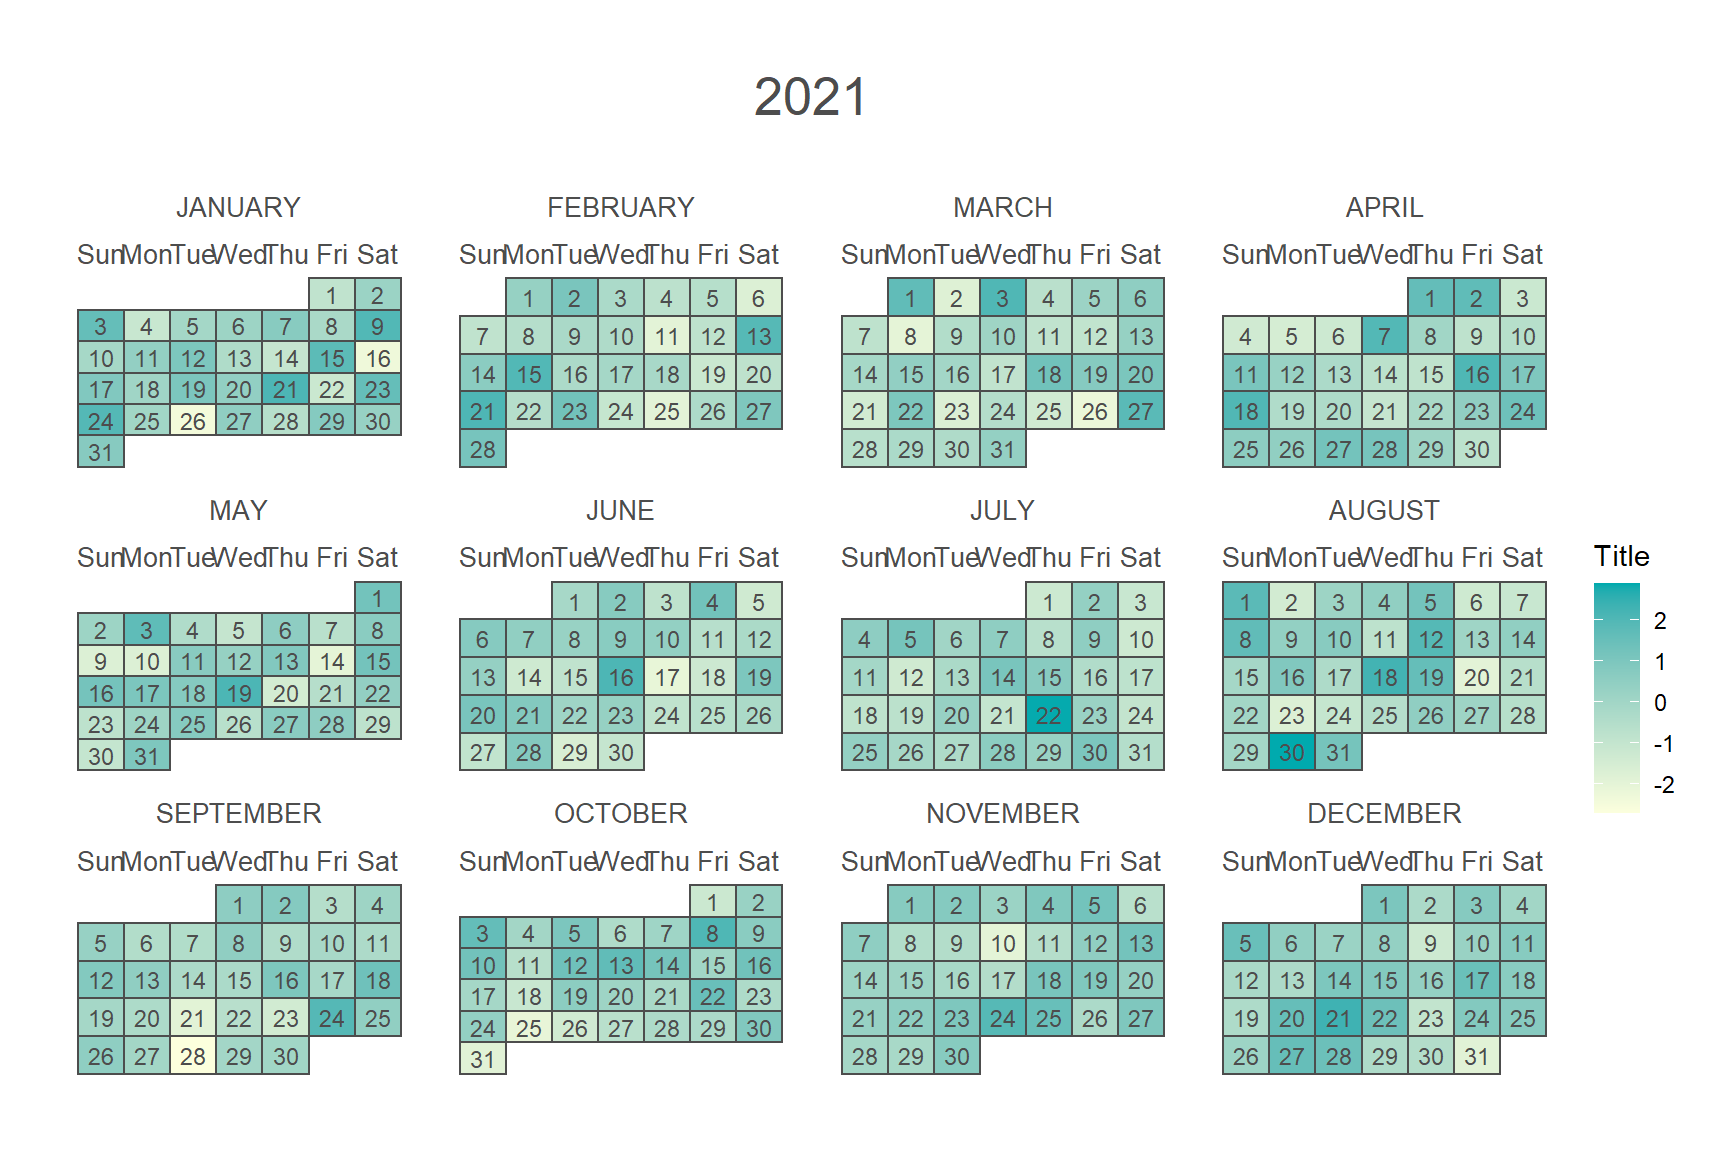 Heat map calendar in ggplot2